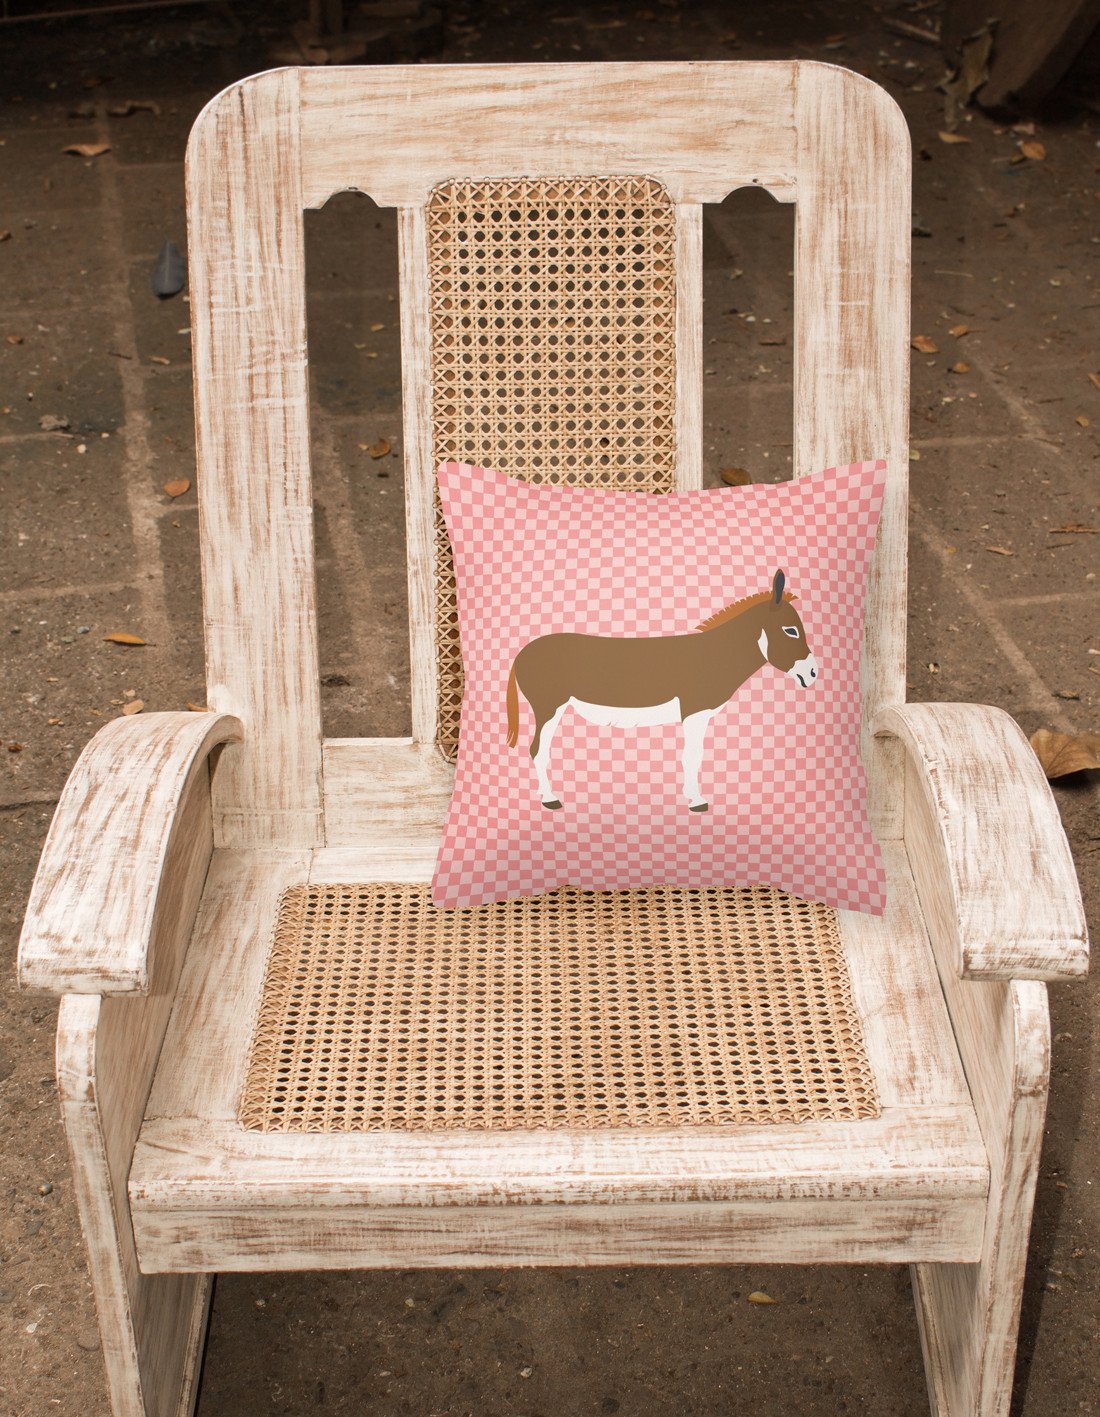 Miniature Mediterranian Donkey Pink Check Fabric Decorative Pillow BB7847PW1818 by Caroline's Treasures